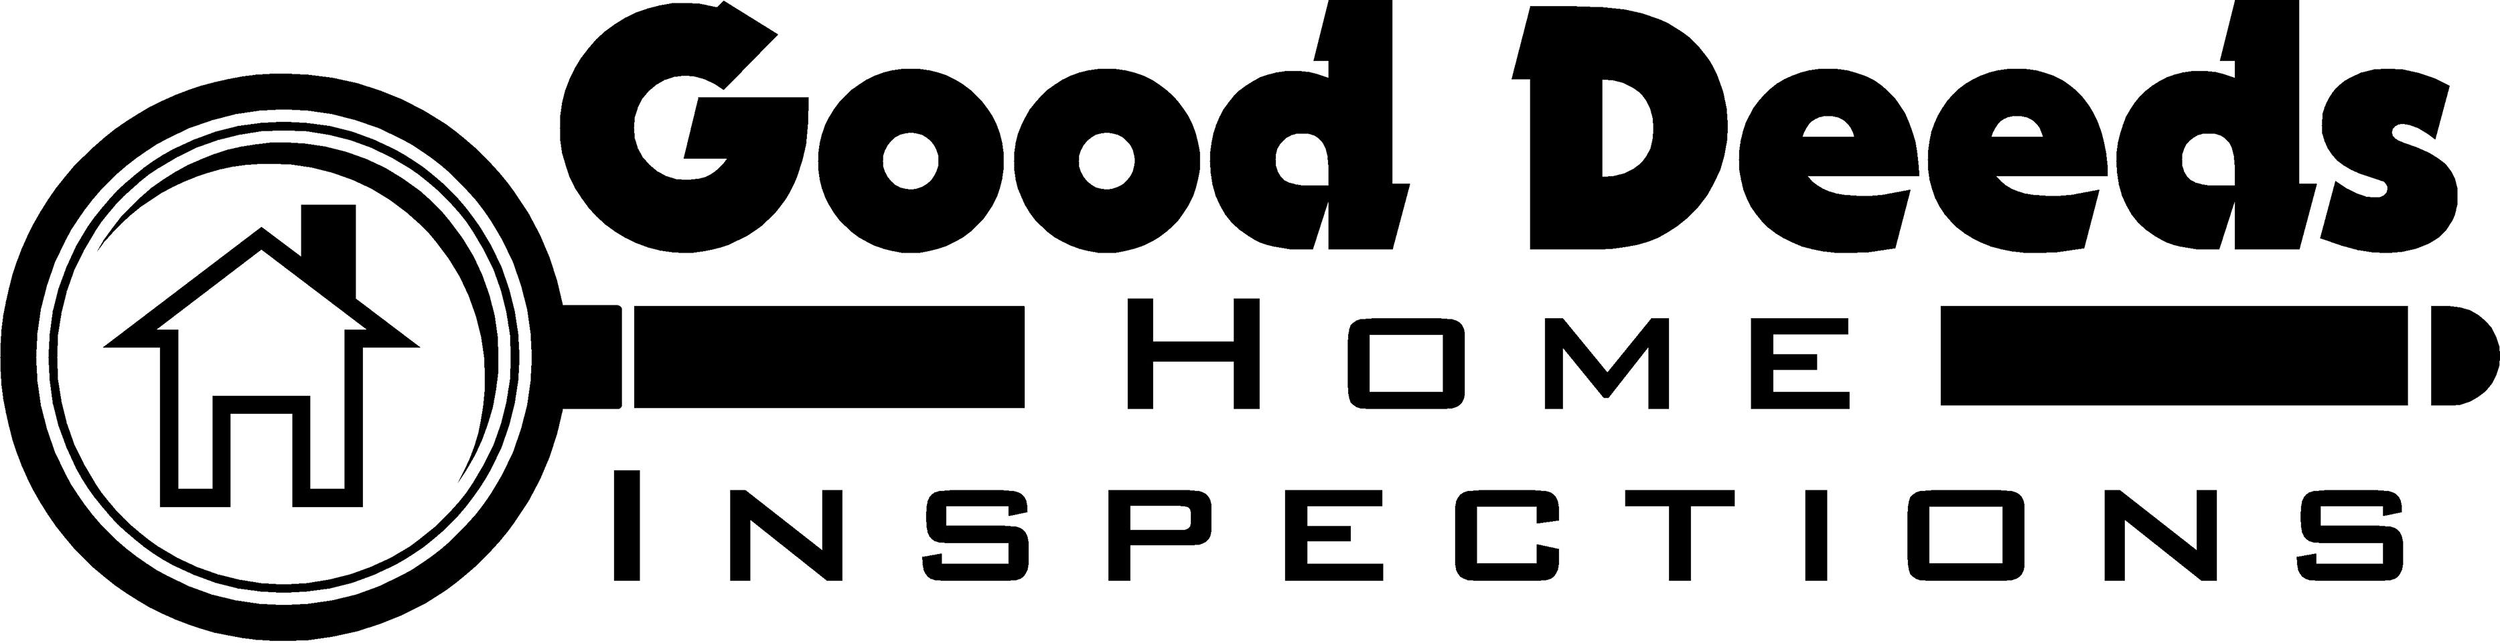 Good Deeds Home Inspection